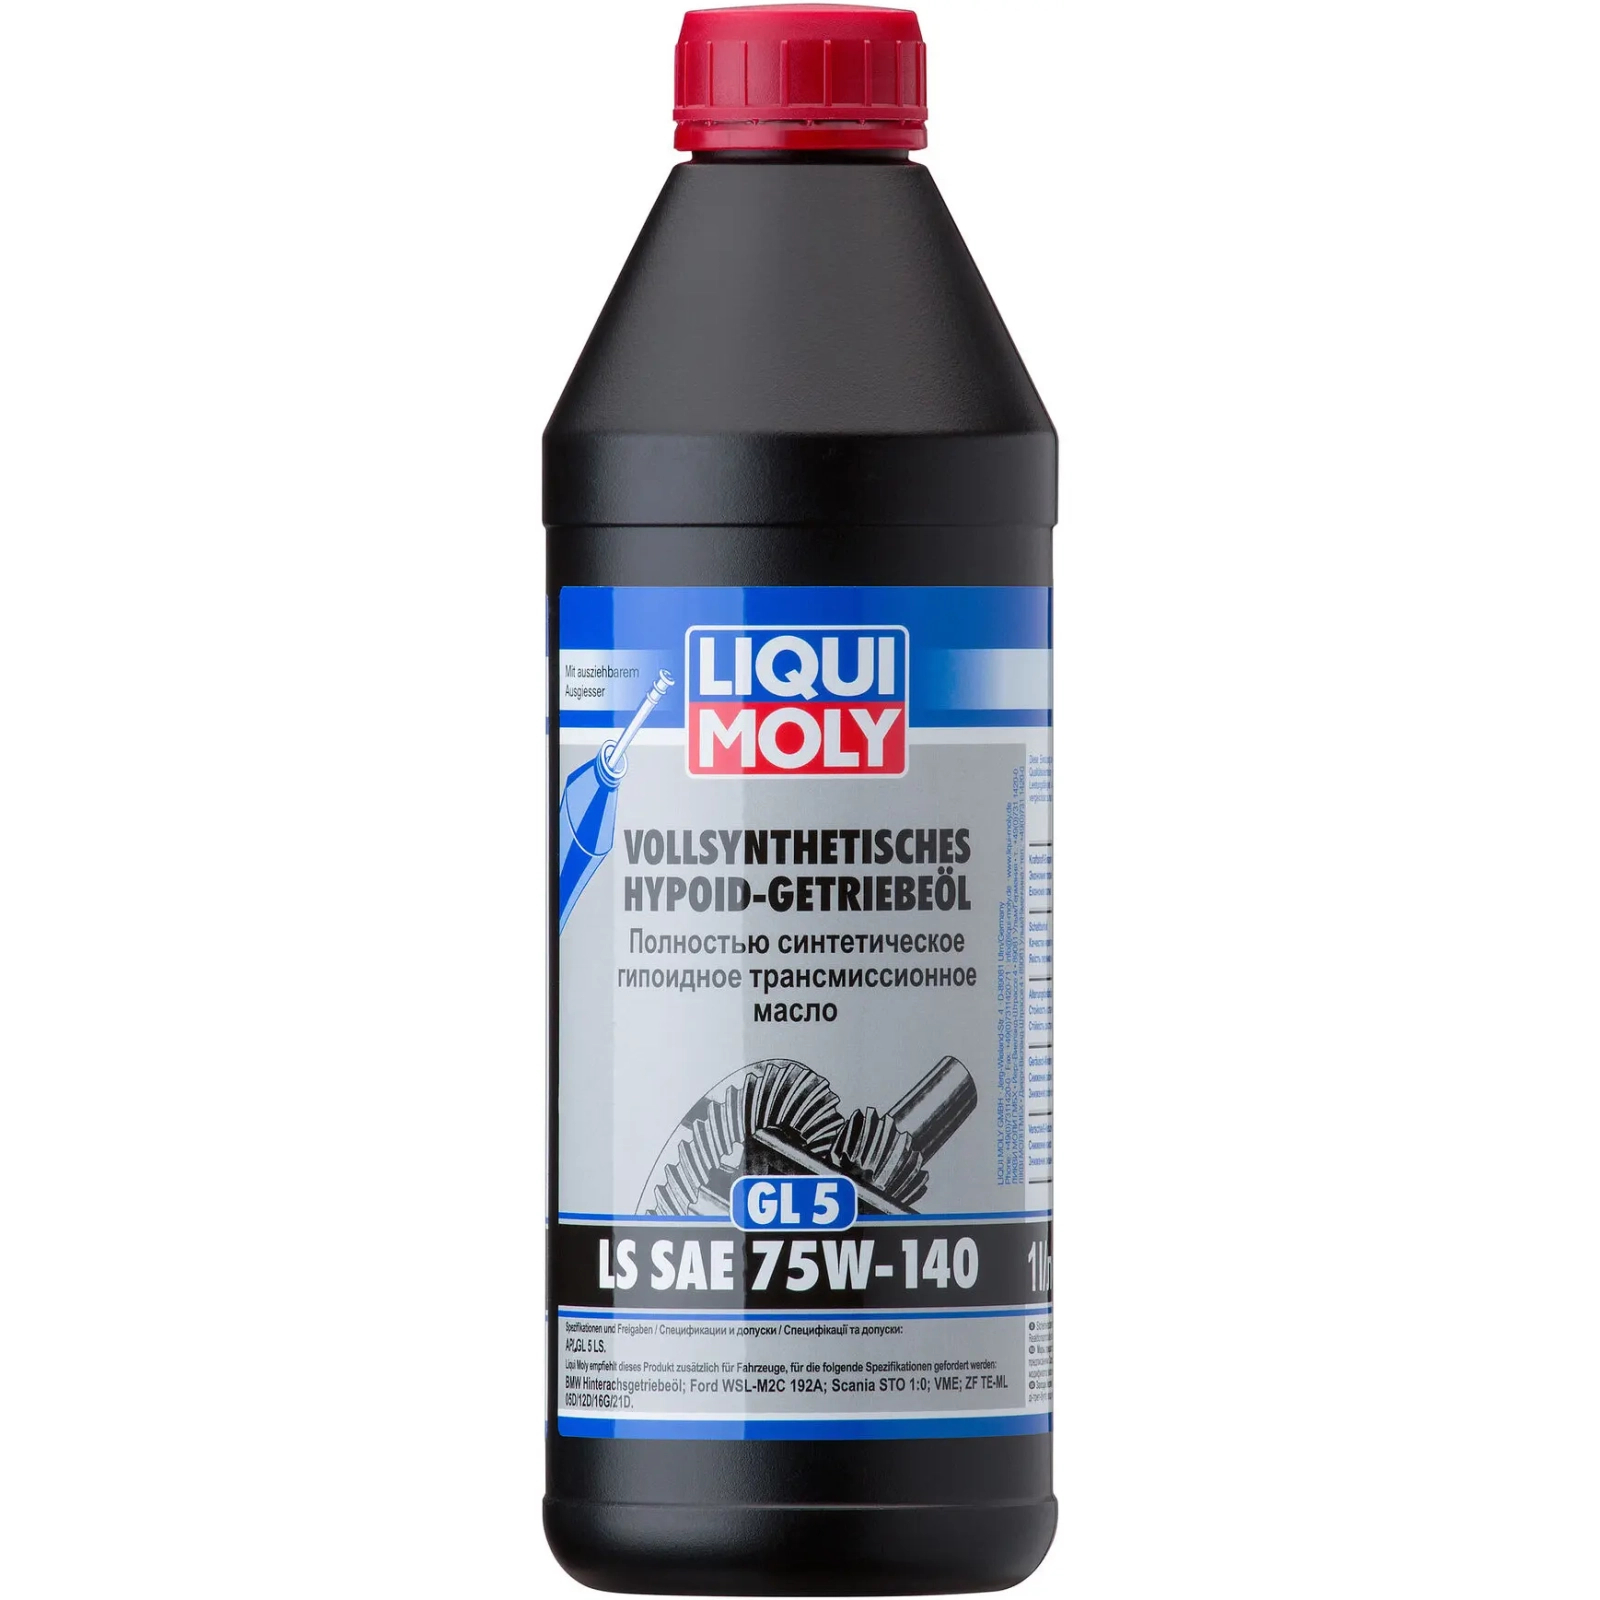 Трансмиссионное масло Liqui Moly VOLLSYNTHETISCHES HYPOID-GETRIEBEOIL GL5 LS 75W-140 1л (4421)